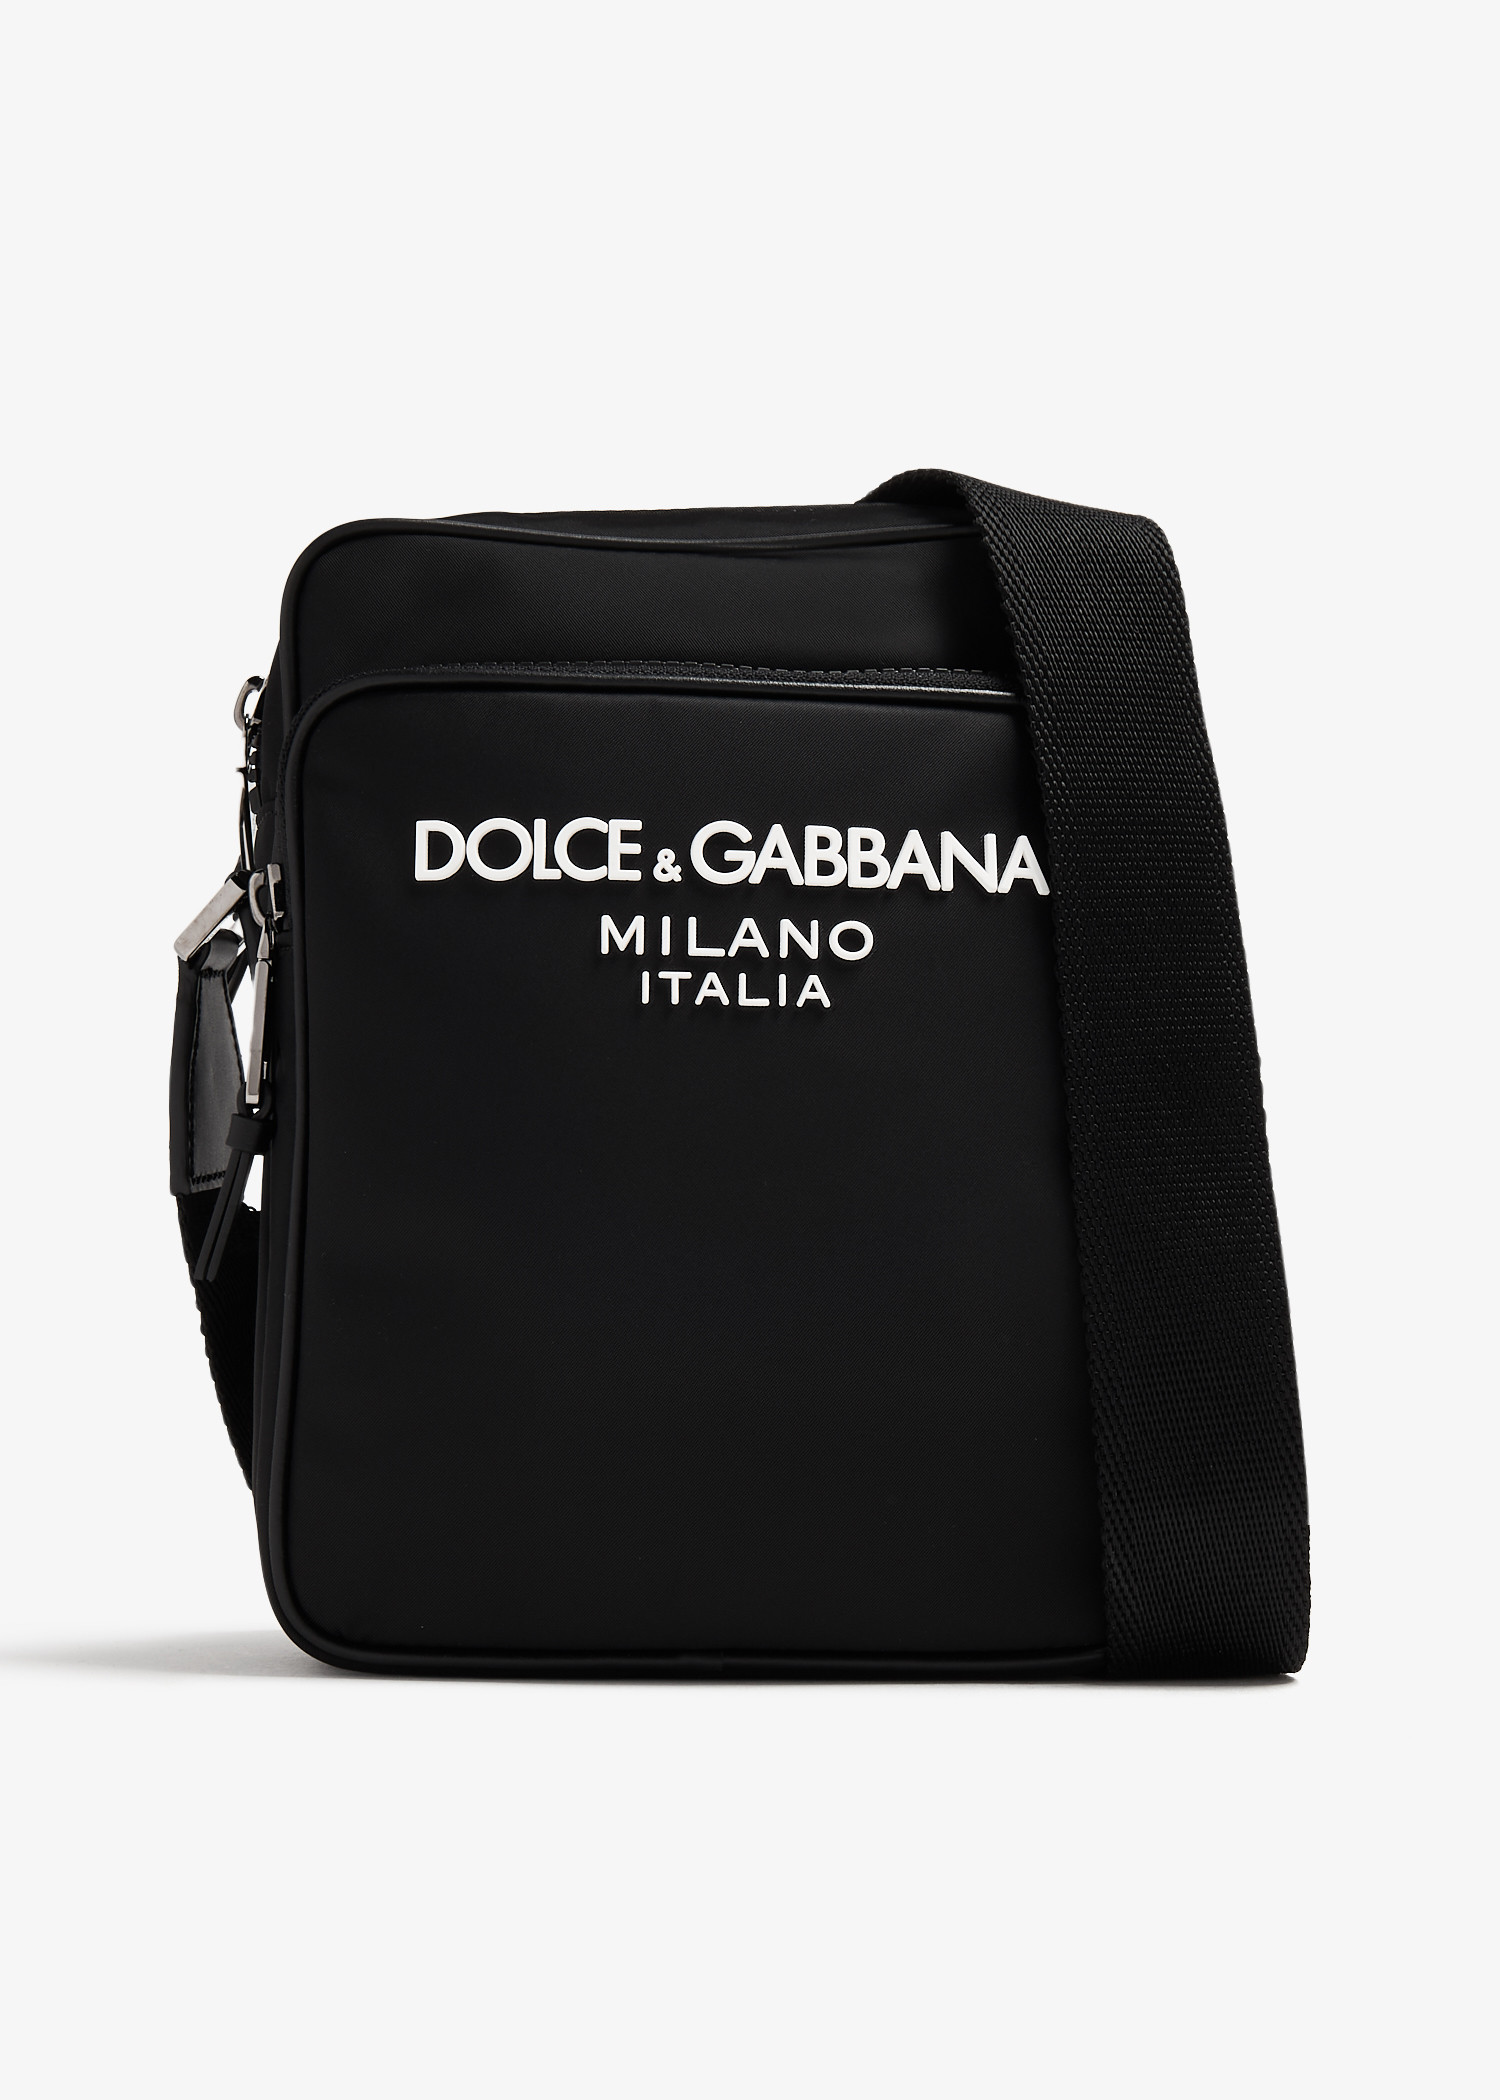 Dolce&Gabbana Logo nylon crossbody bag for Men - Black in UAE